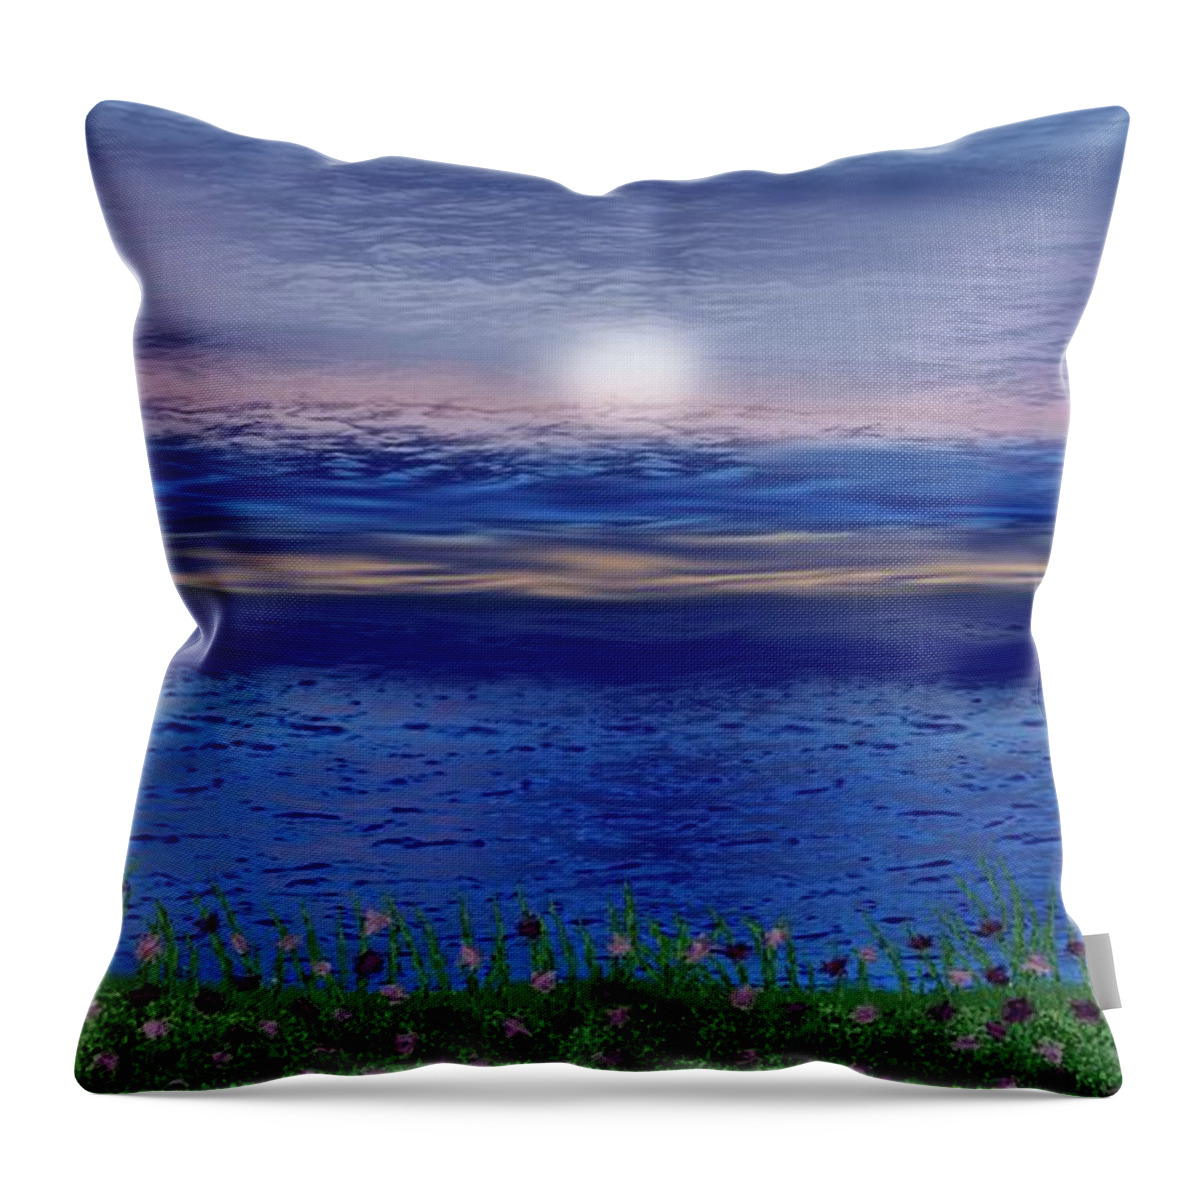 Sunrise Throw Pillow featuring the digital art Beachside sunrise by Elaine Rose Hayward